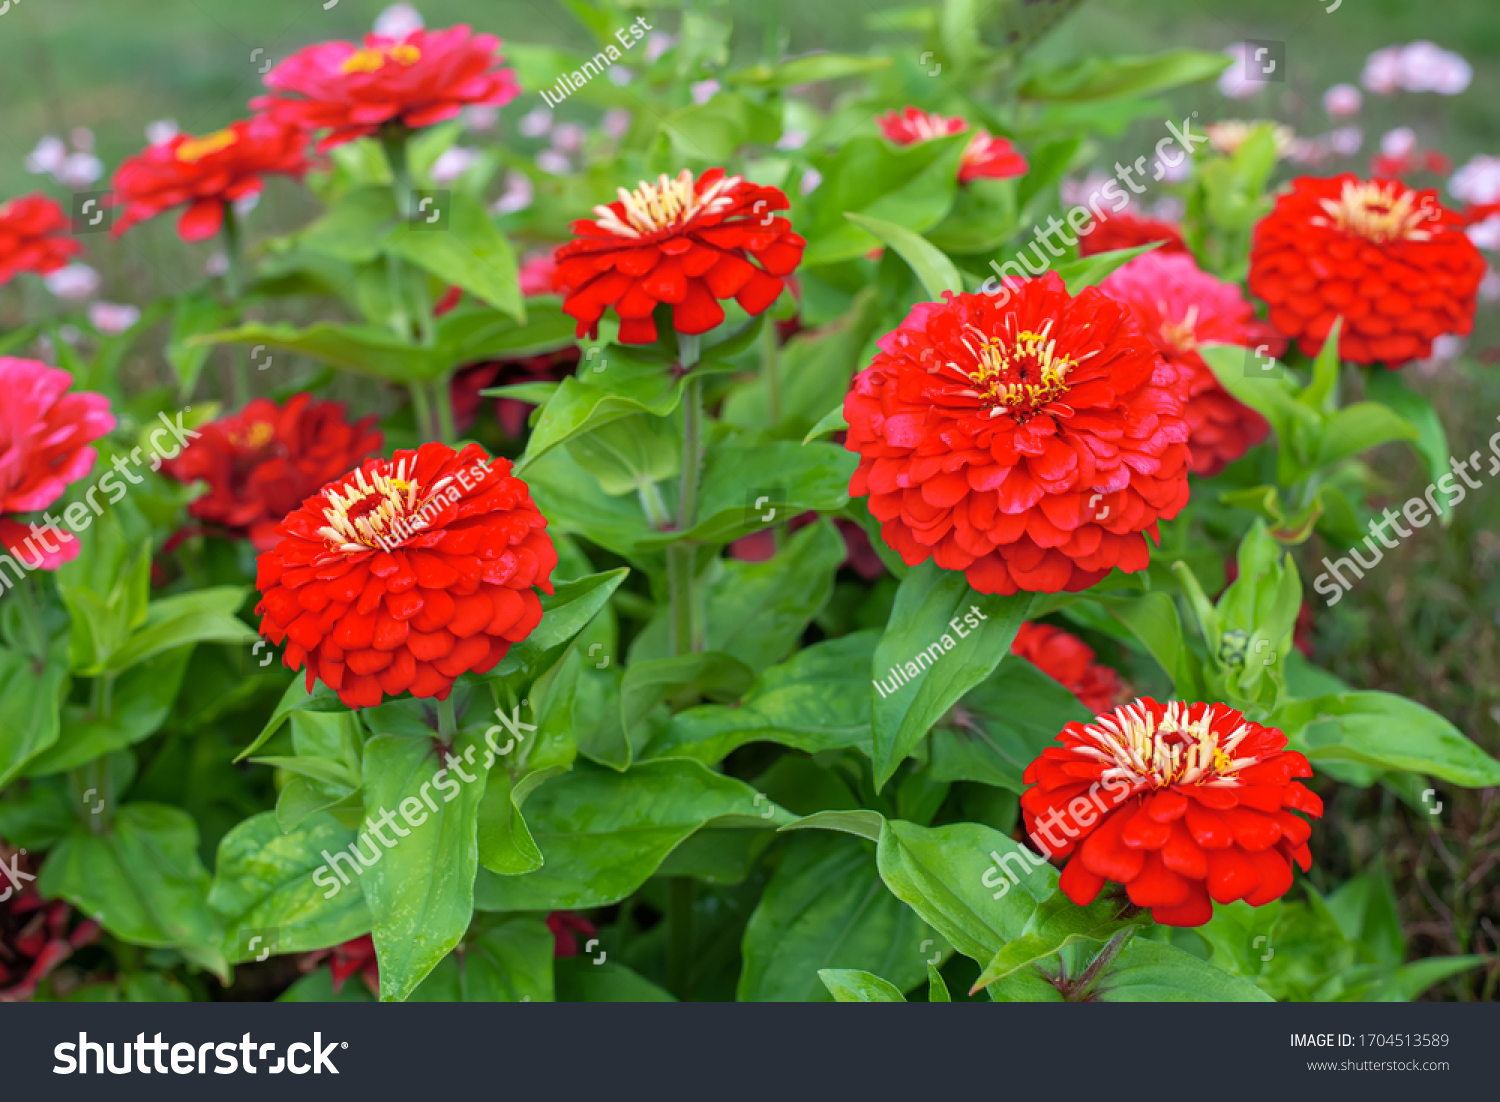 Red flowers of Zinnia elegans, common zinnia or elegant zinnia in the formal garden #1704513589